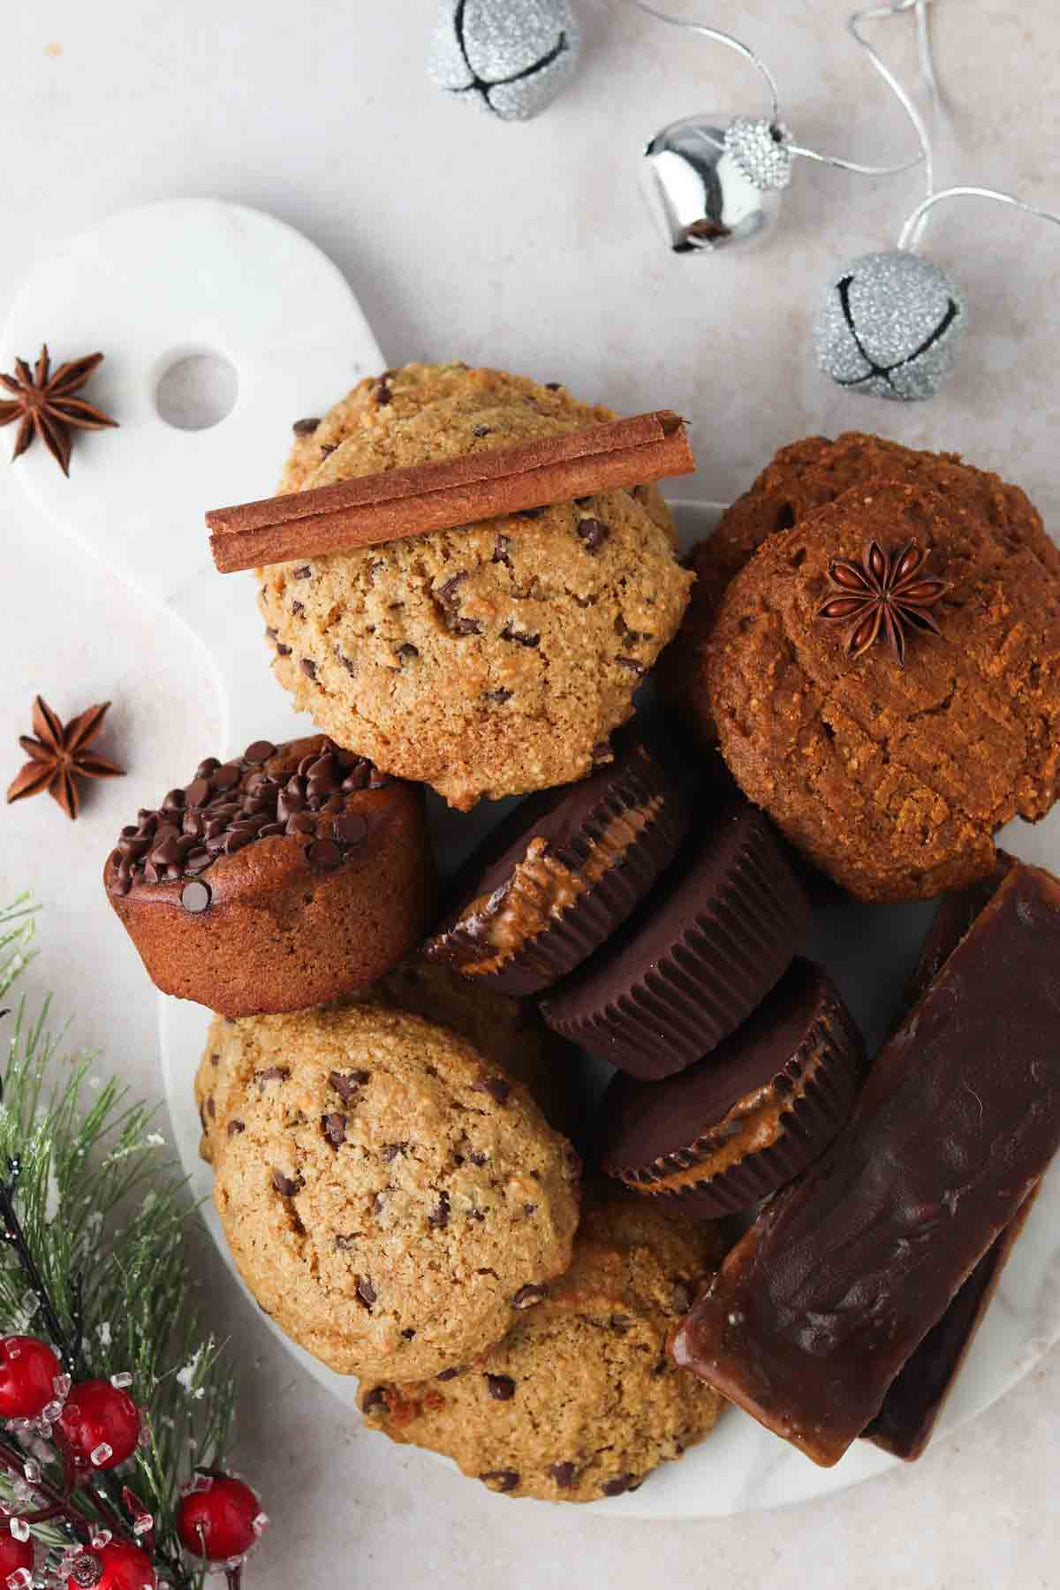 NEW! Preorder Medium Dessert Boxes for Christmas